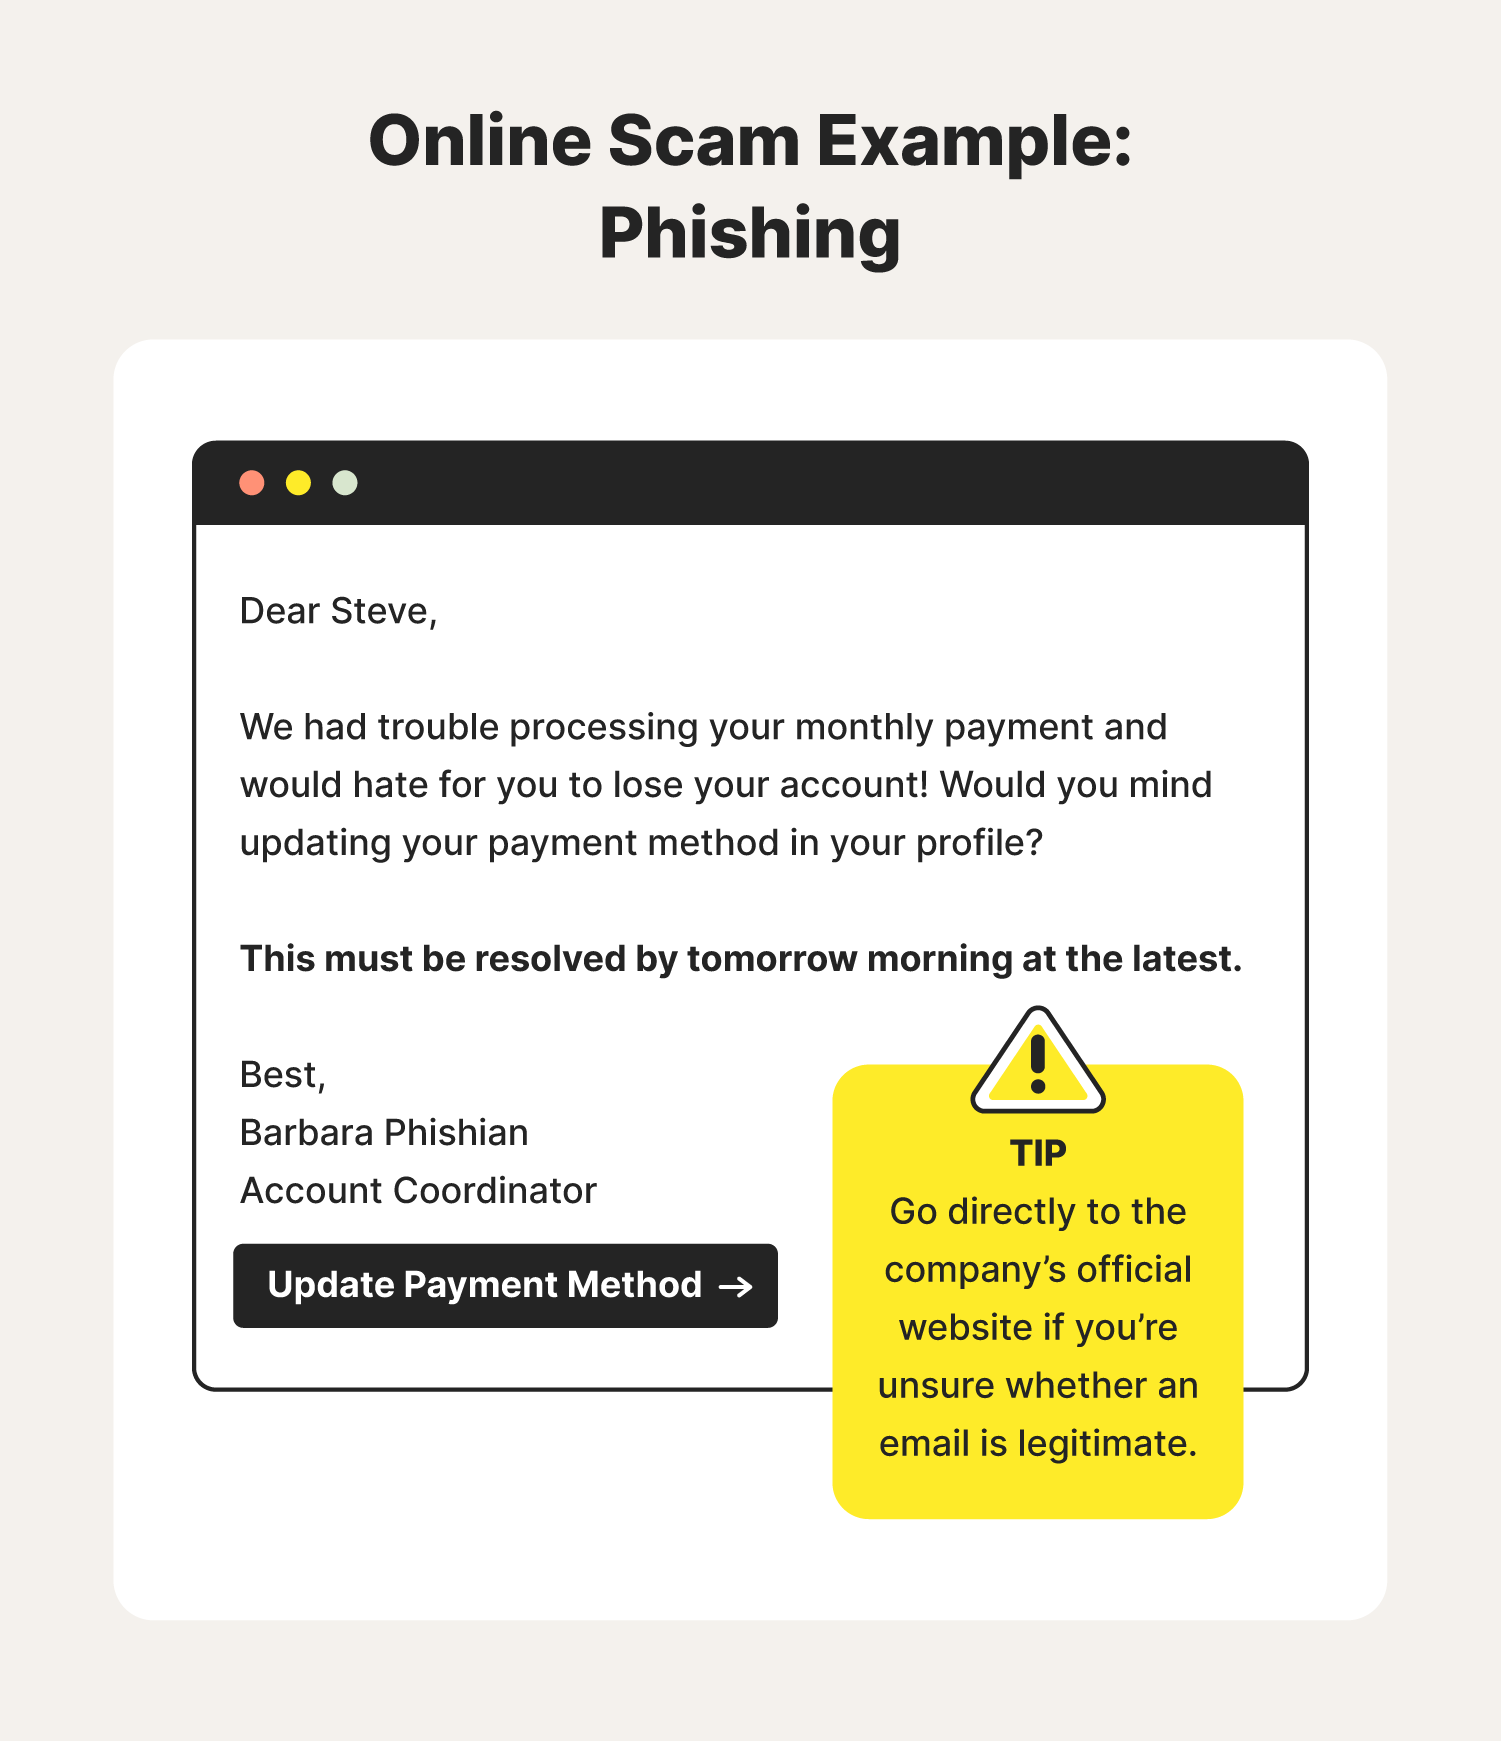 Online scam example phishing